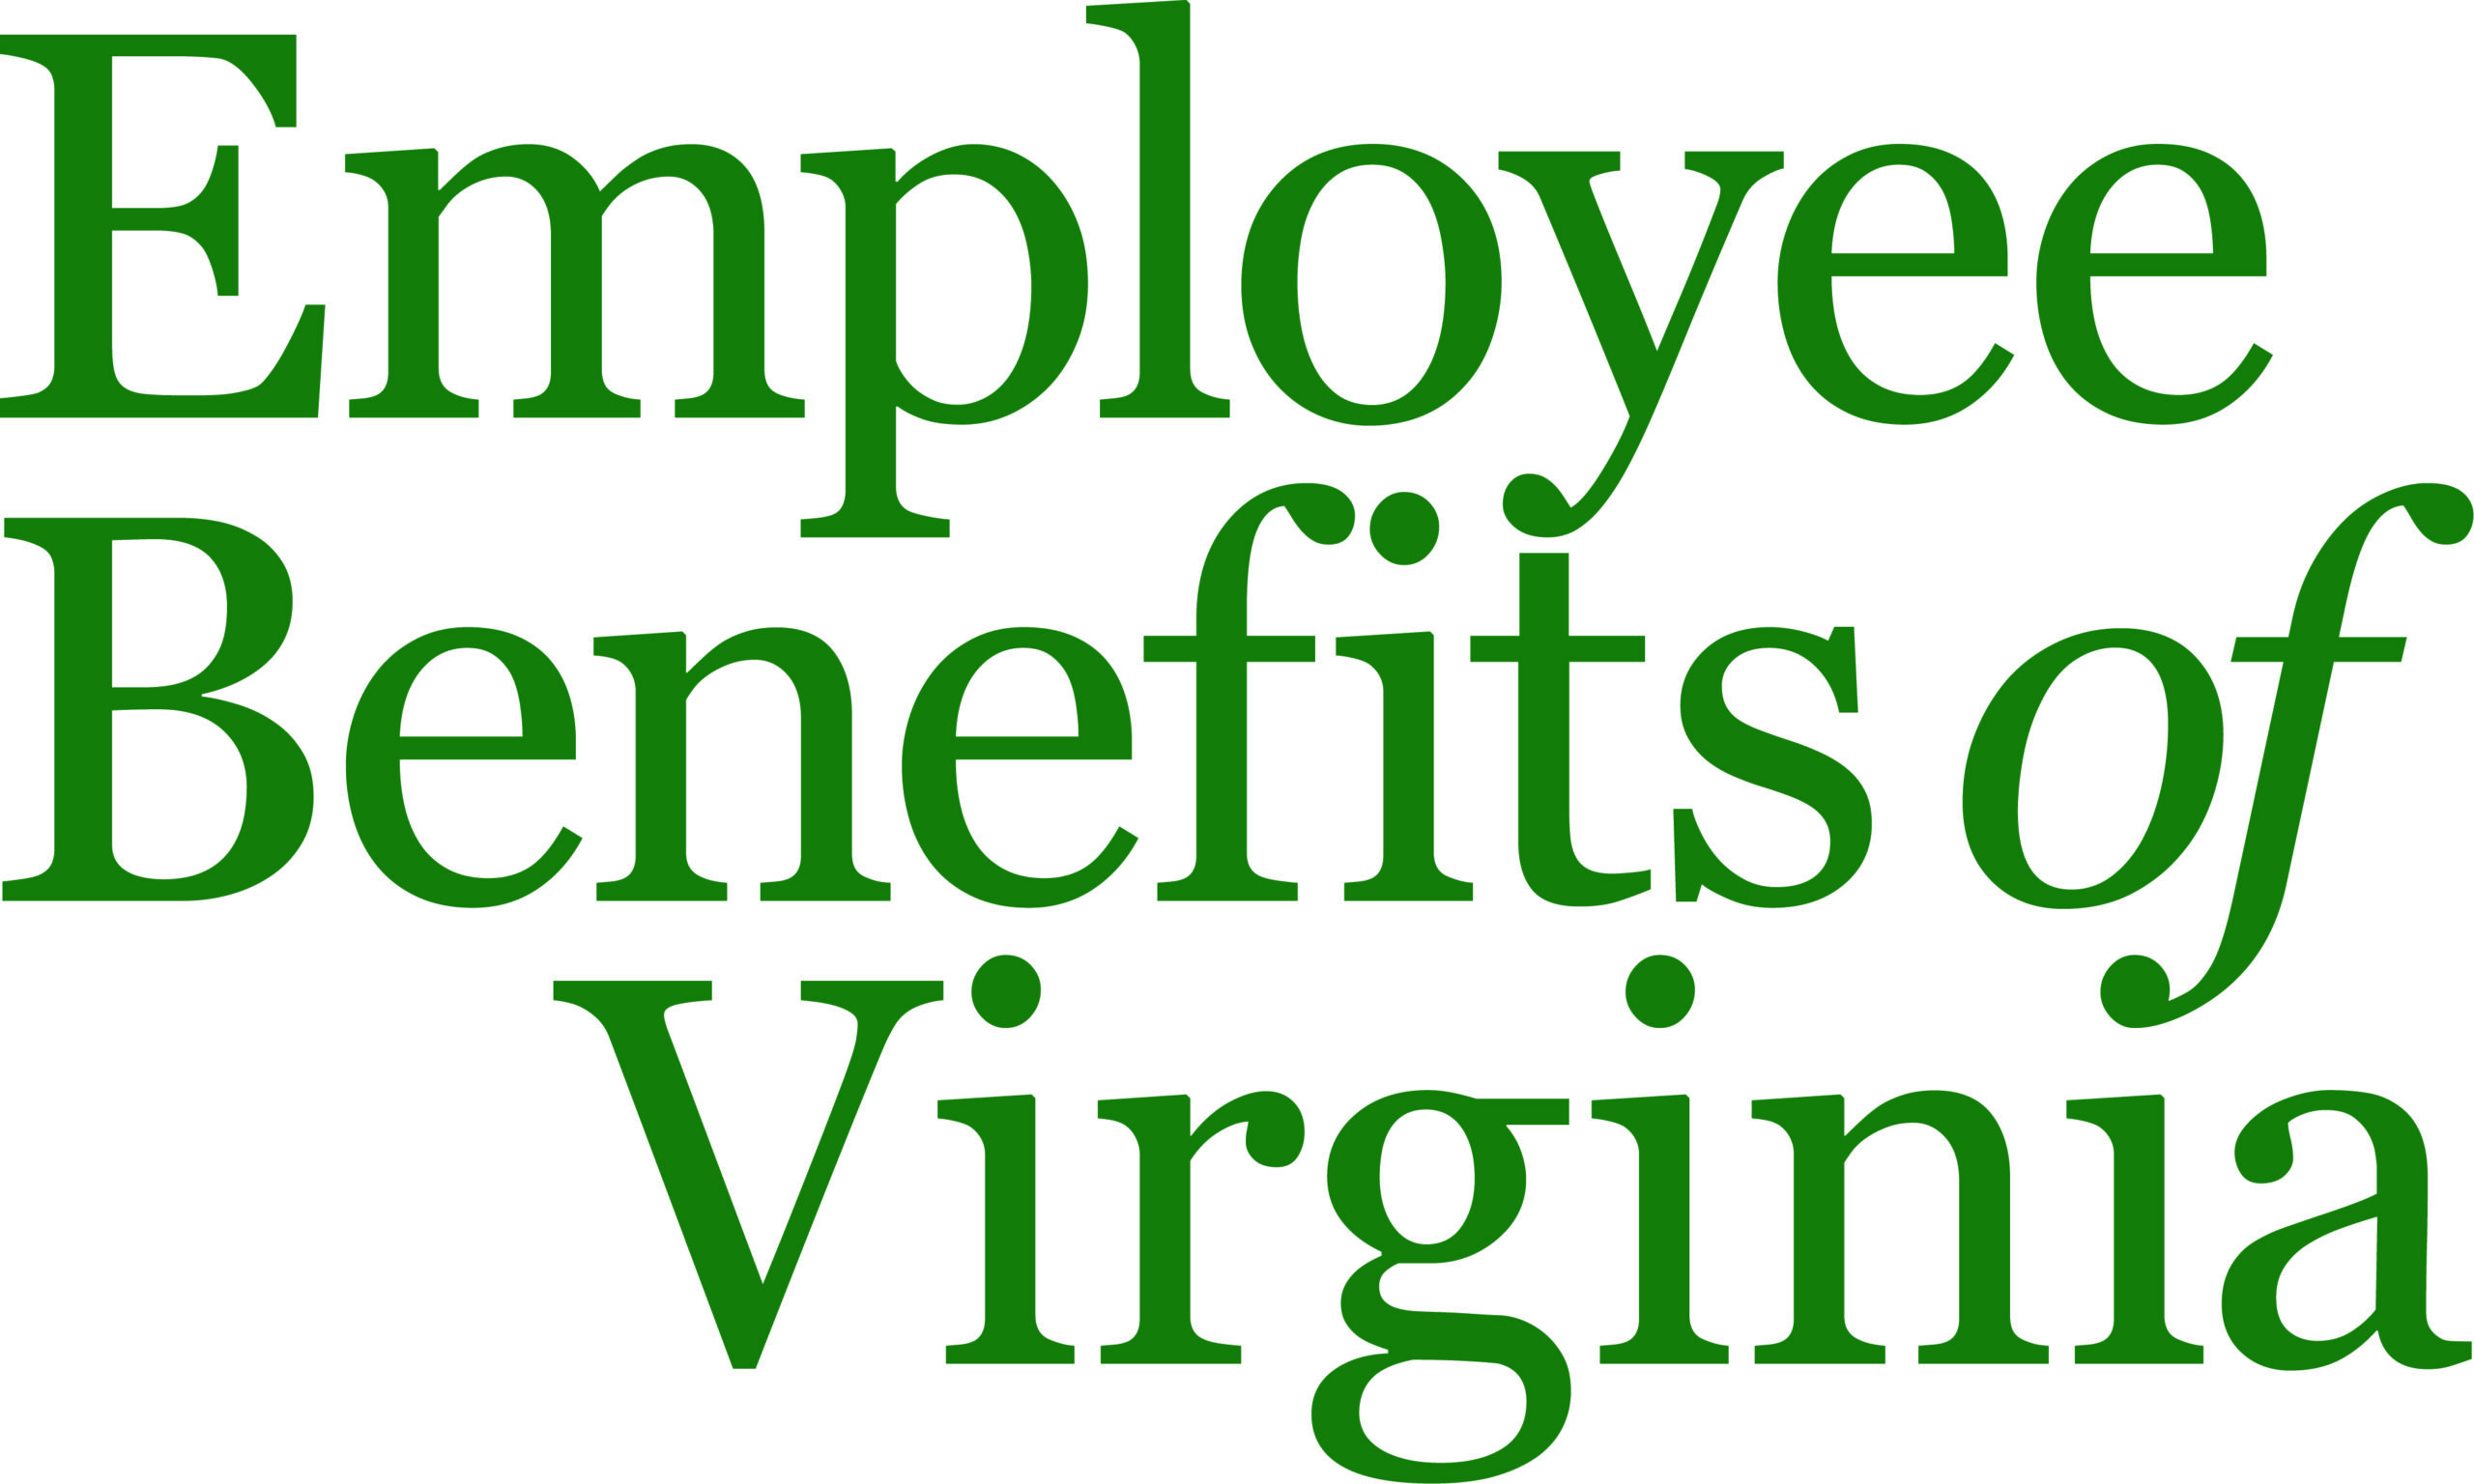 Employee Benefits of Virginia